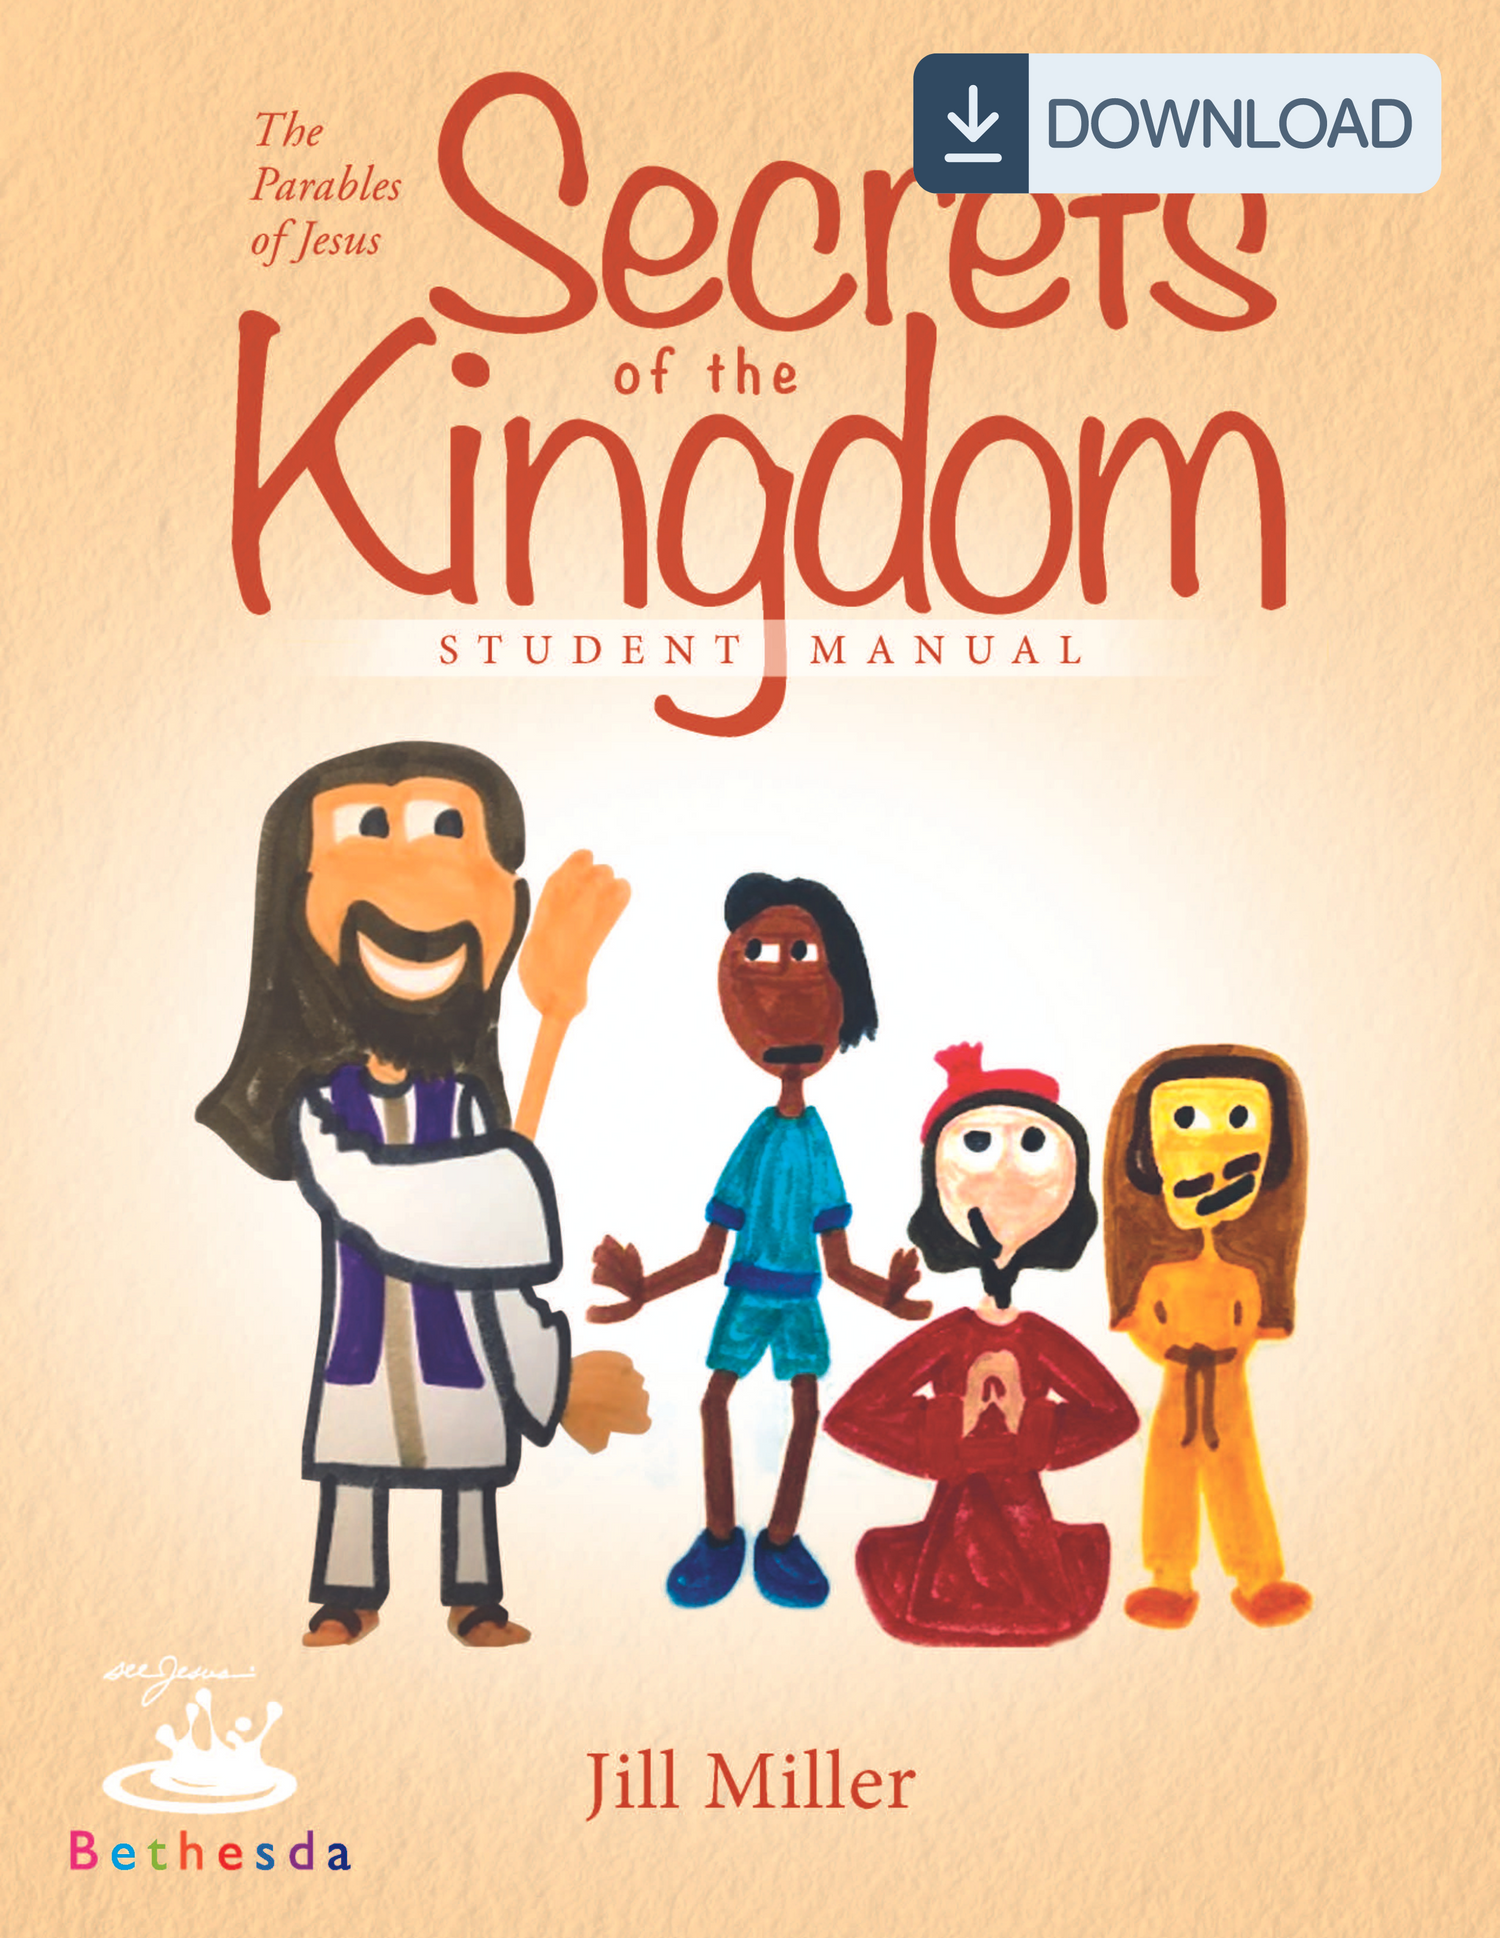 Secrets of the Kingdom Student Manual (PDF)